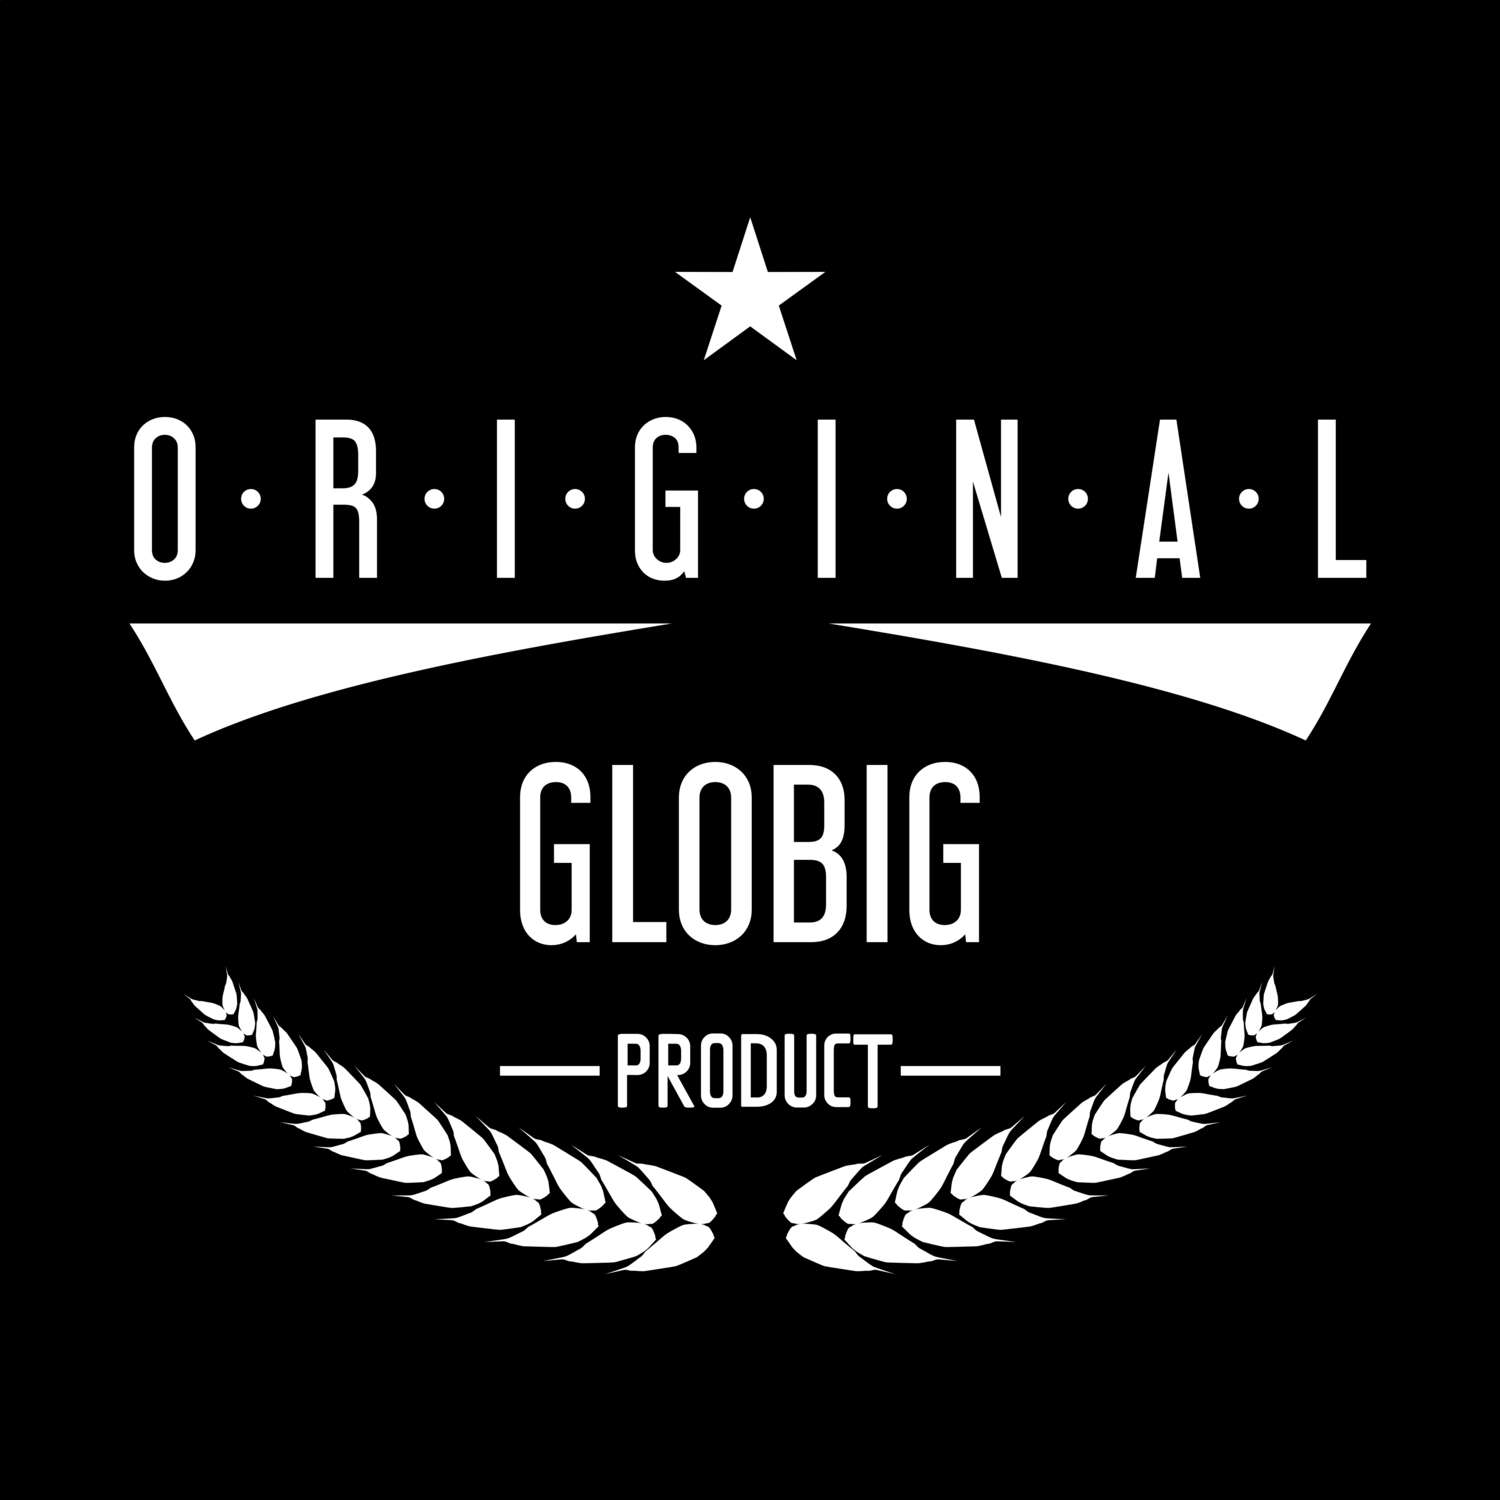 Globig T-Shirt »Original Product«